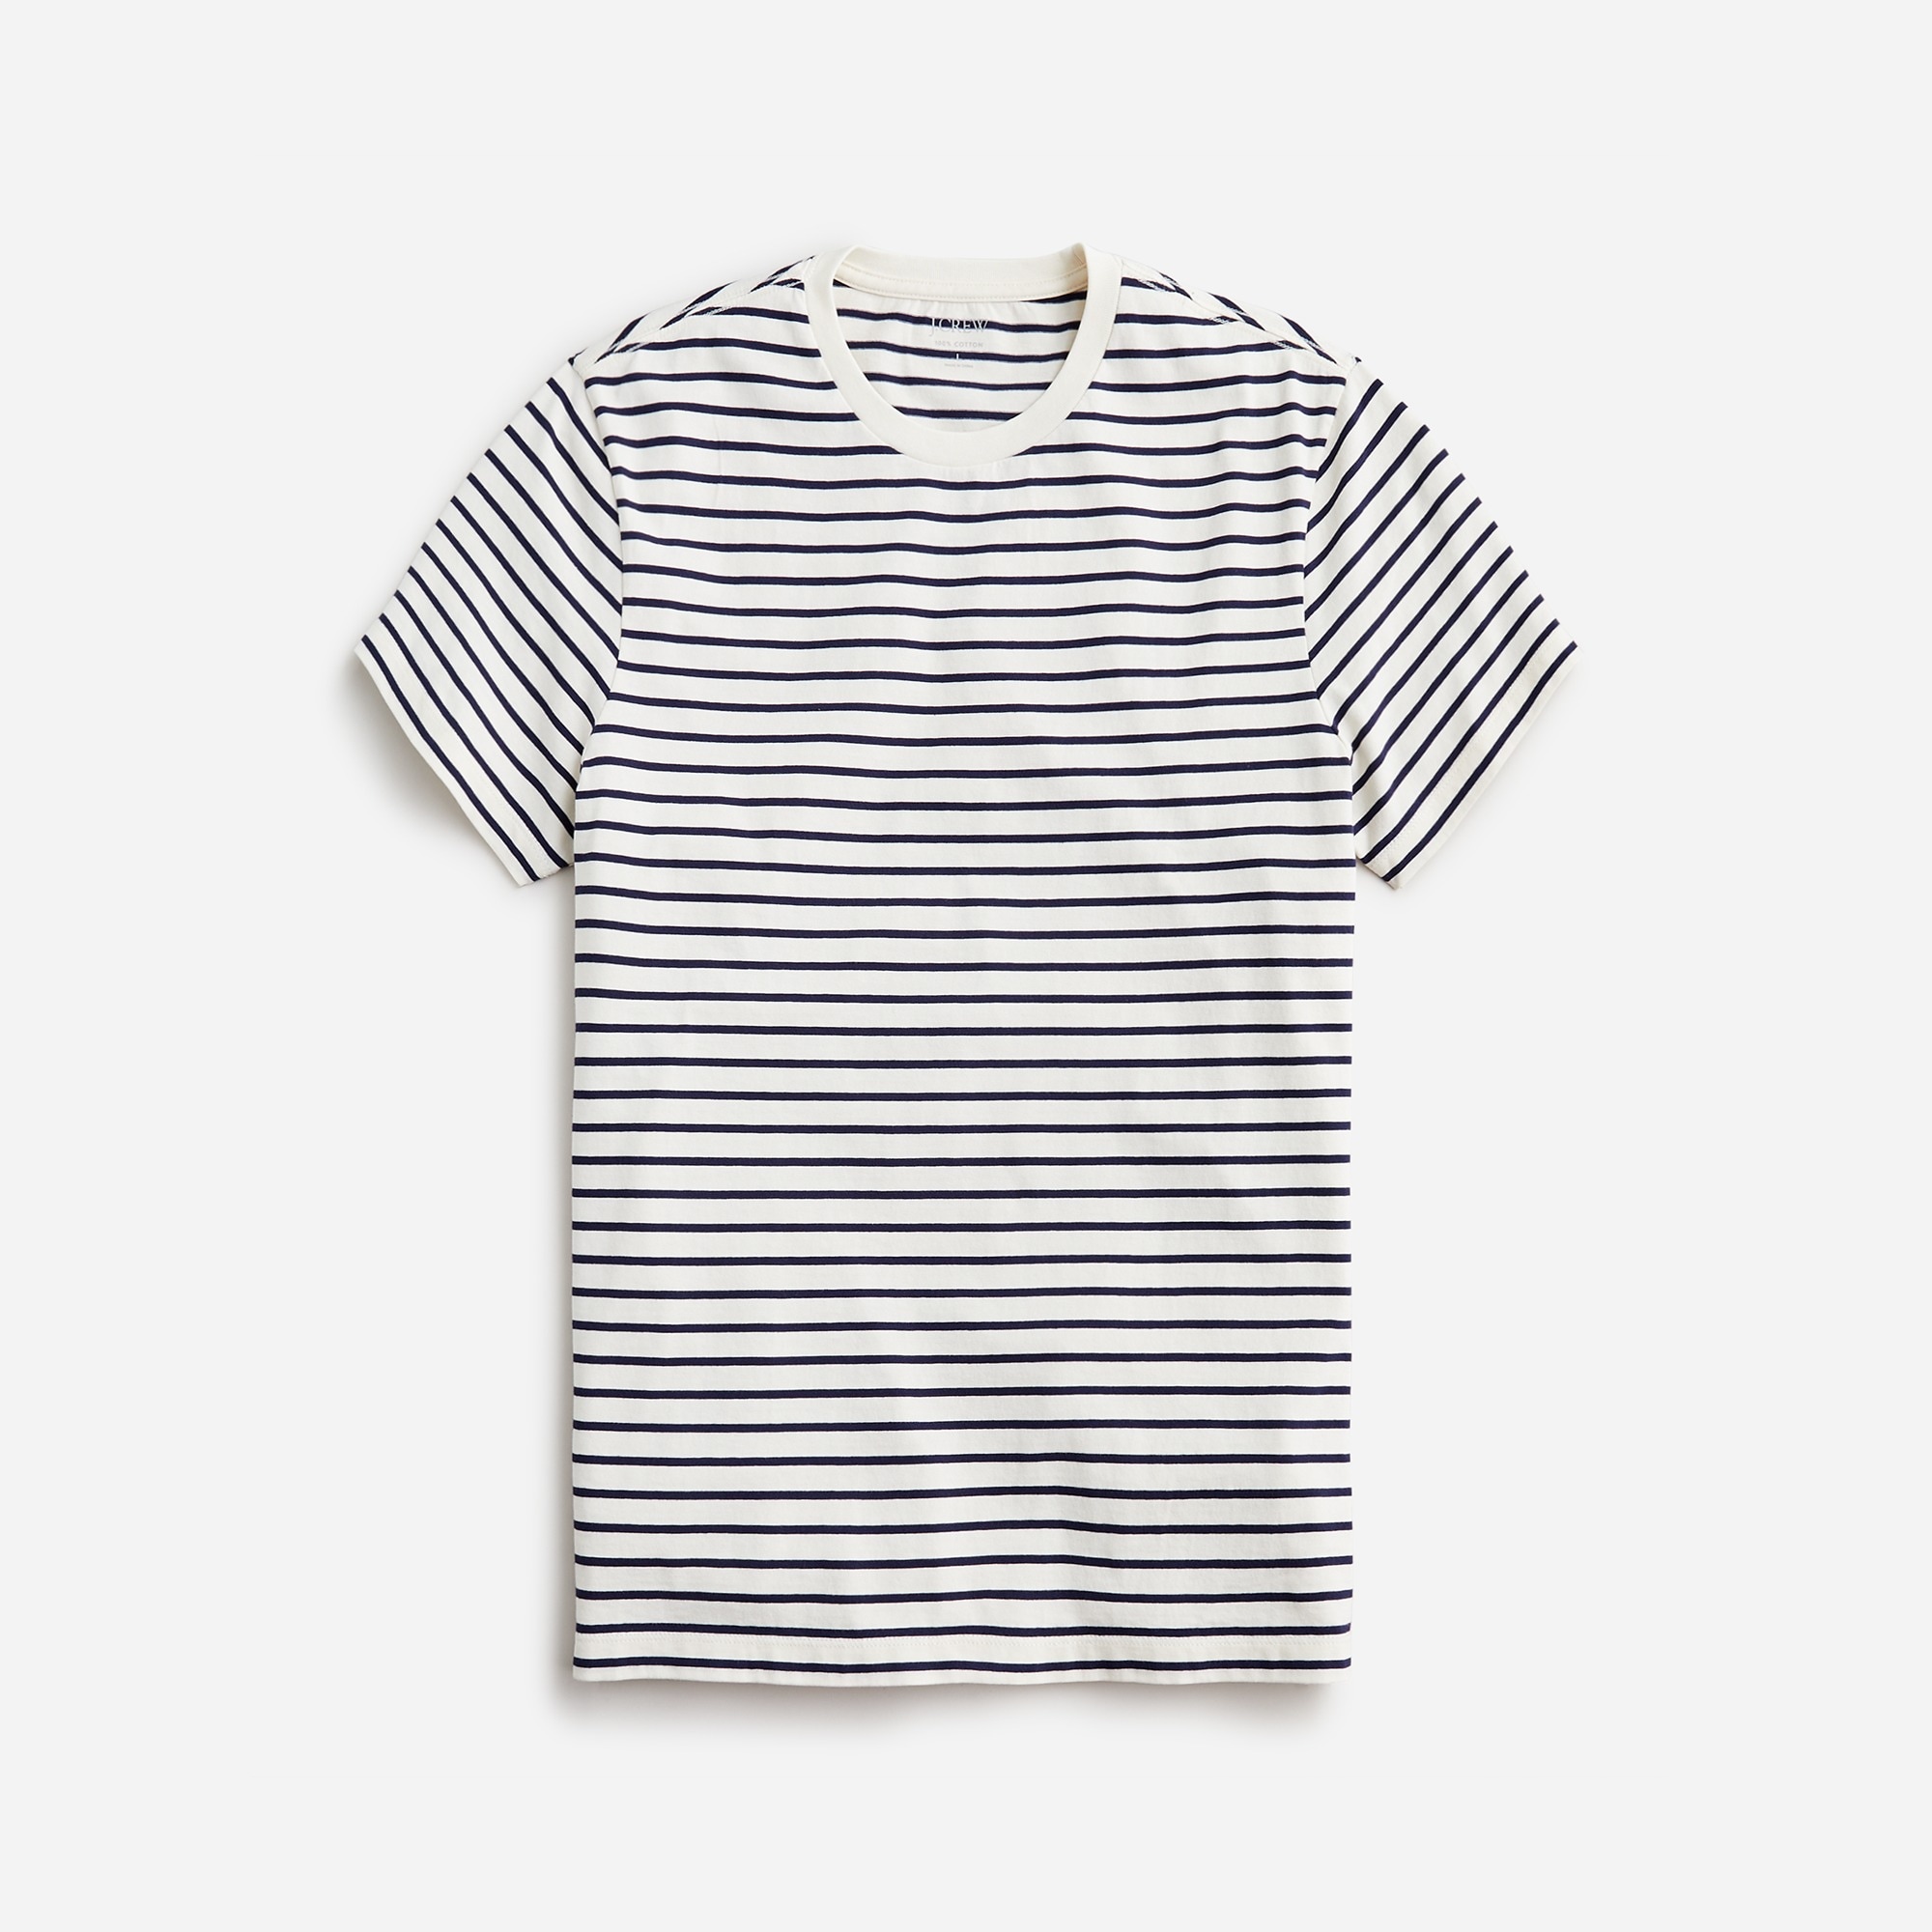 mens Cotton T-shirt in stripe